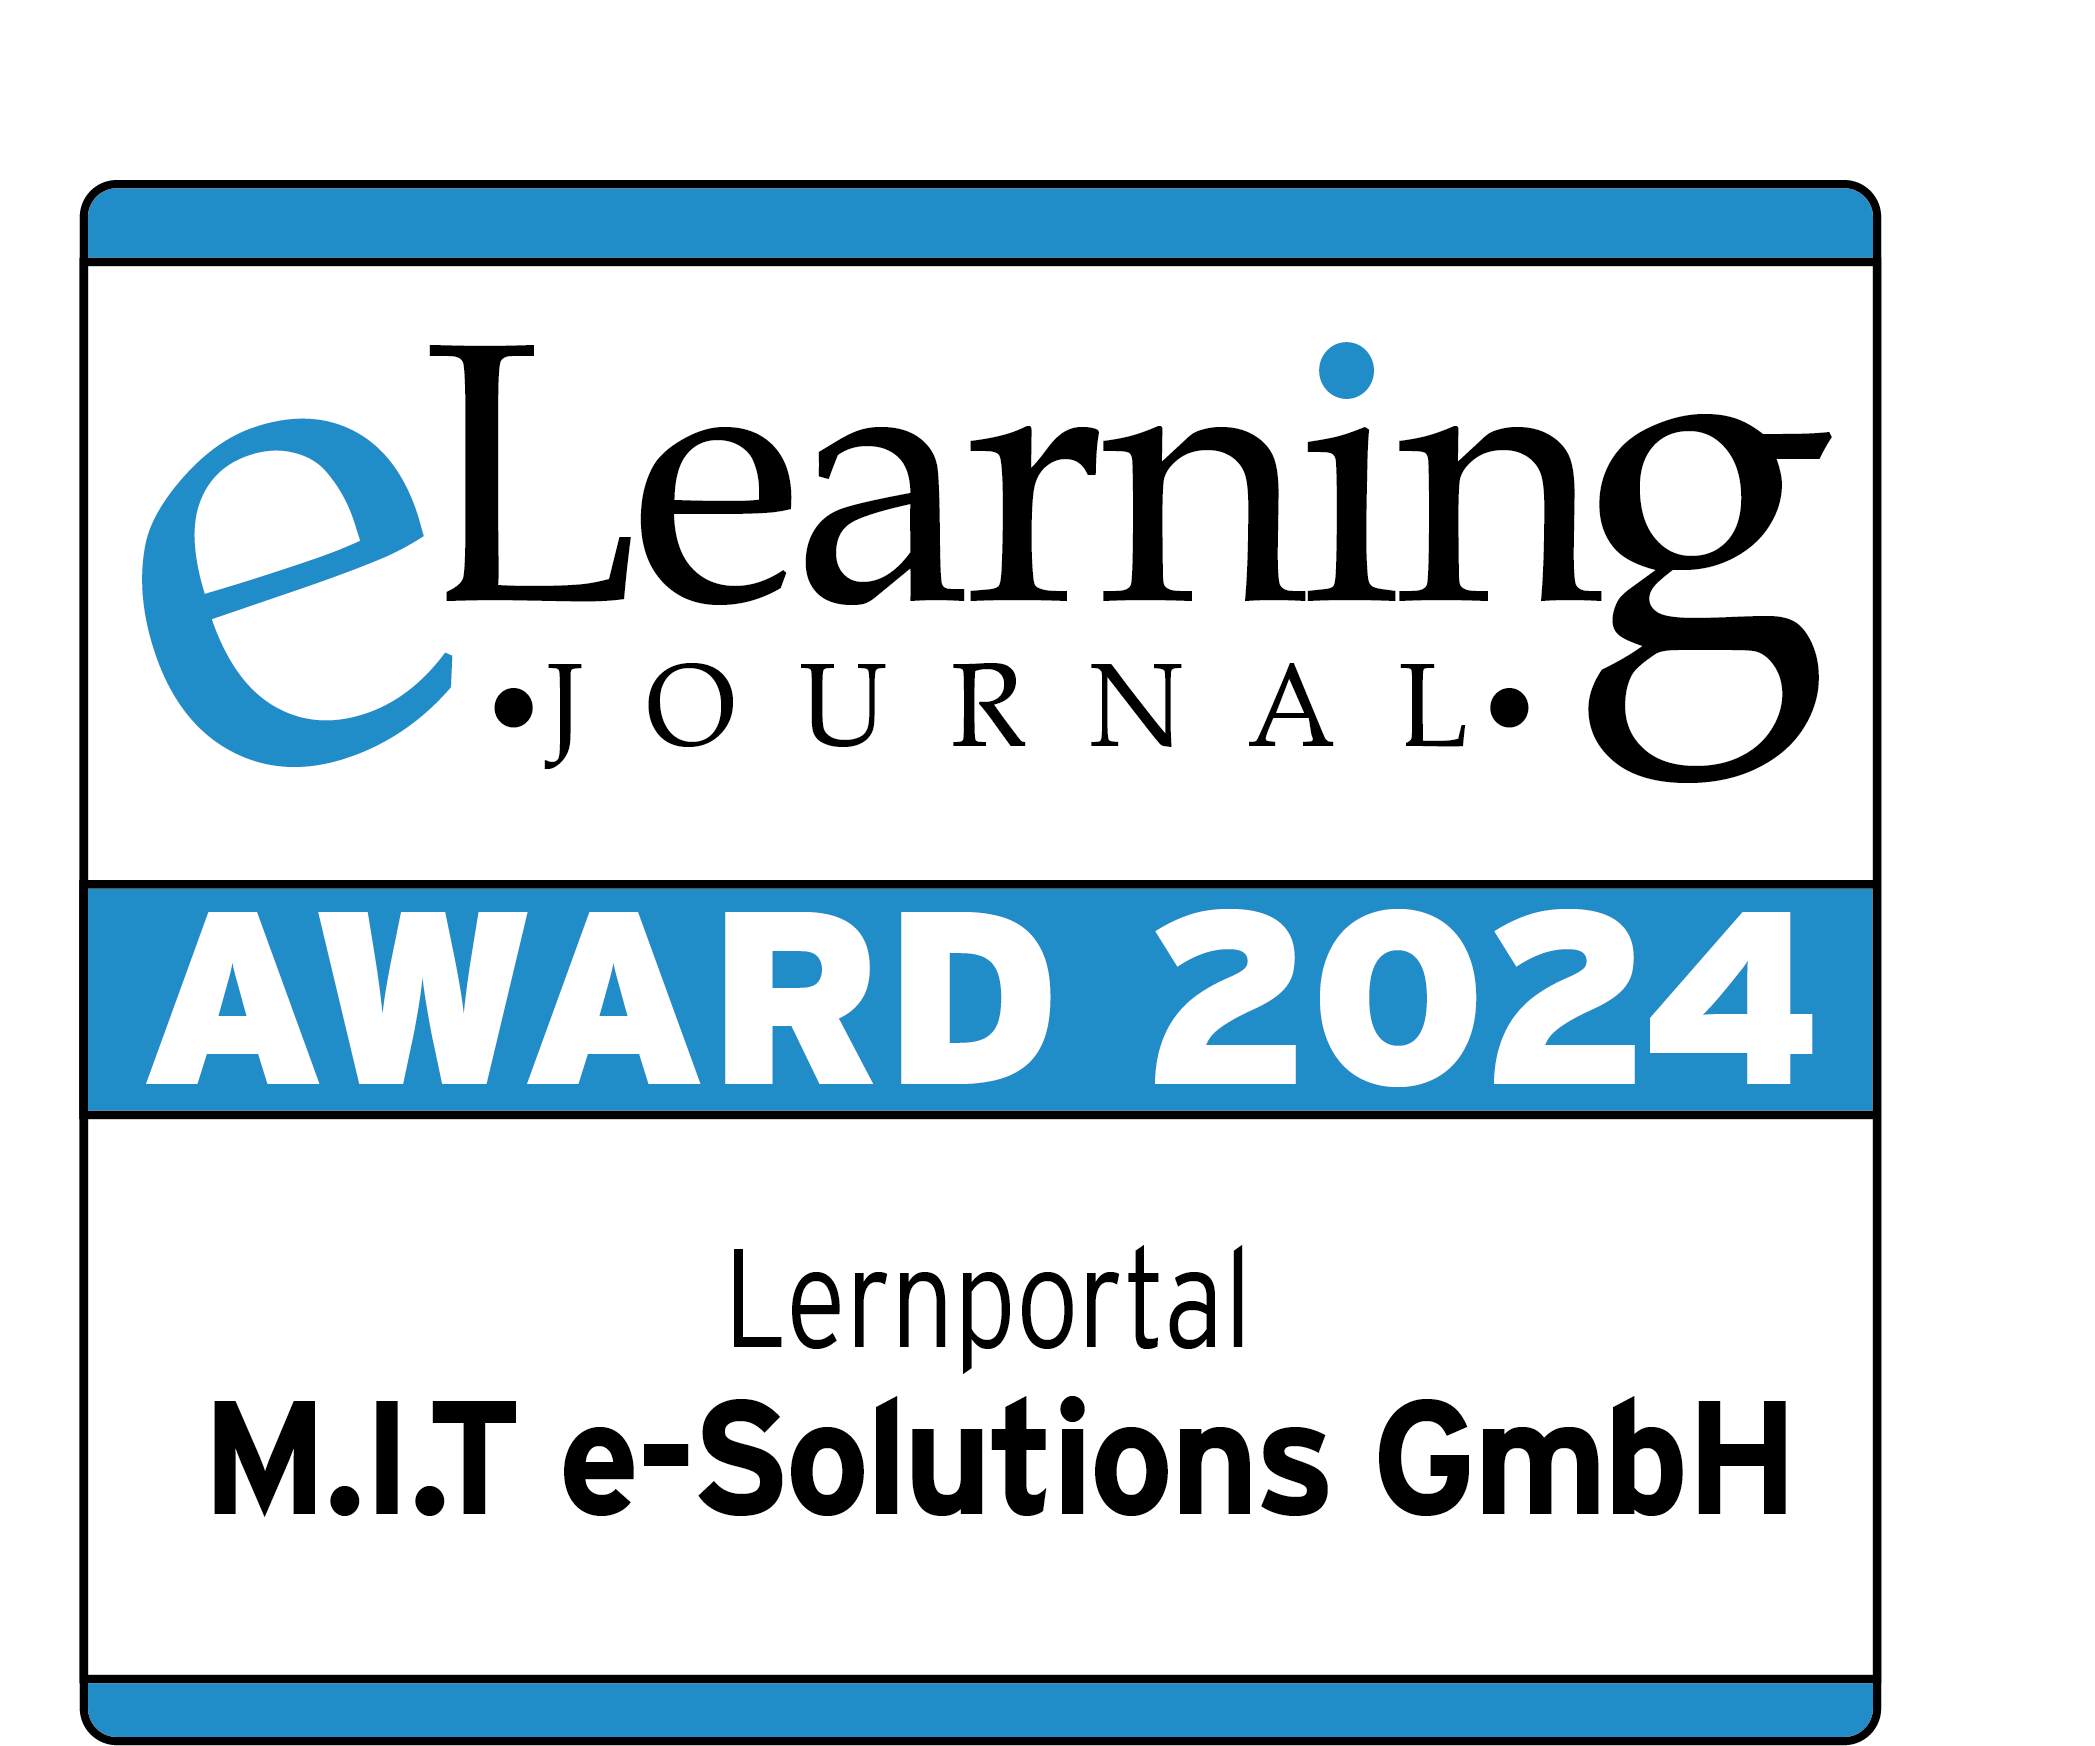 Wir haben den eLearning Journal Award 2024 gewonnen - Kategorie: Lernportal